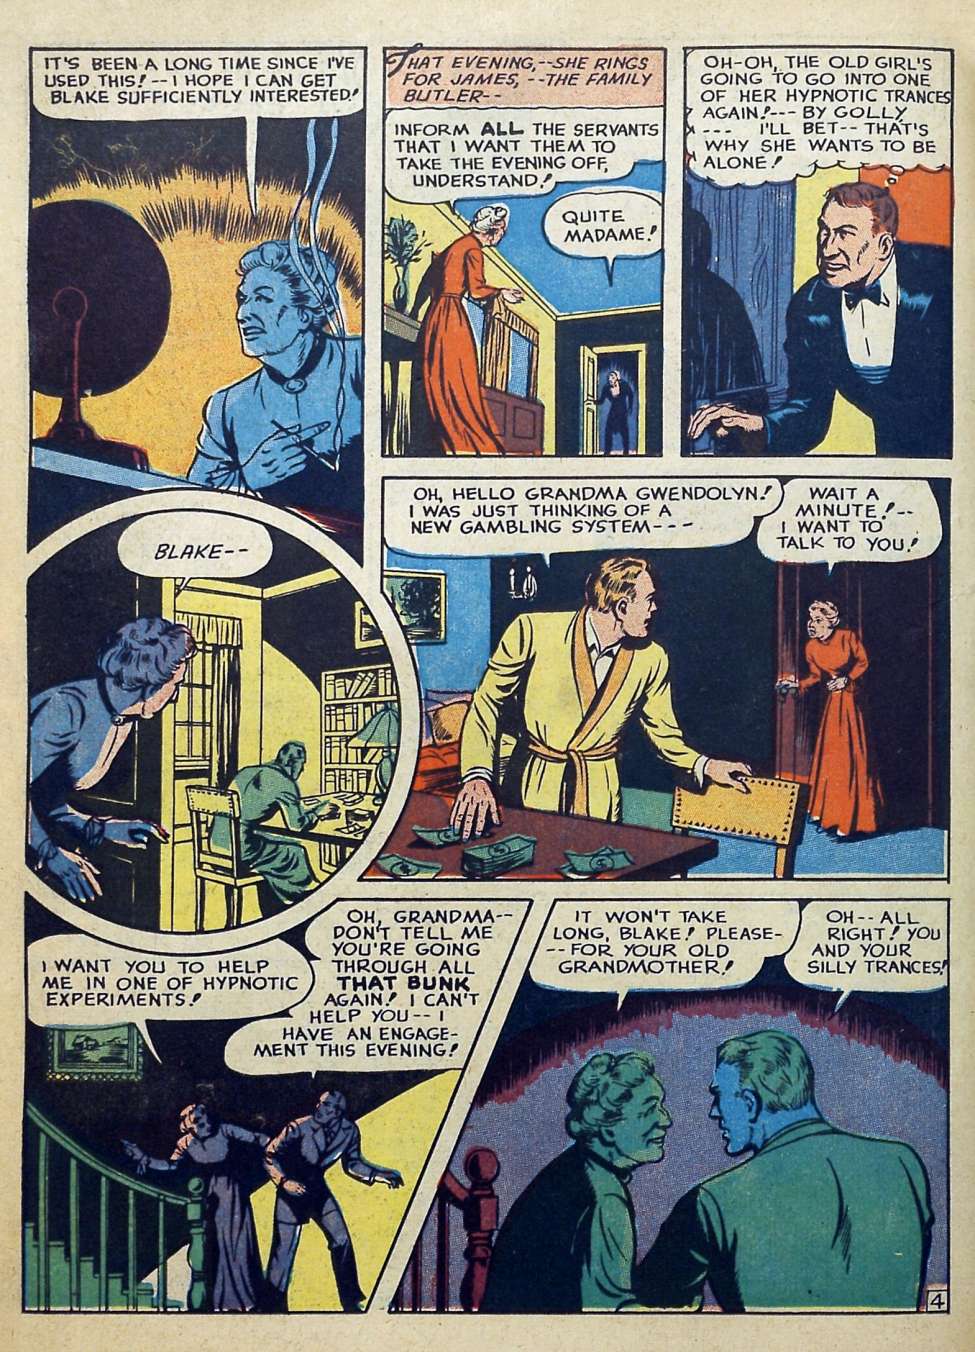 Suspense Comics #3 from 1944 26